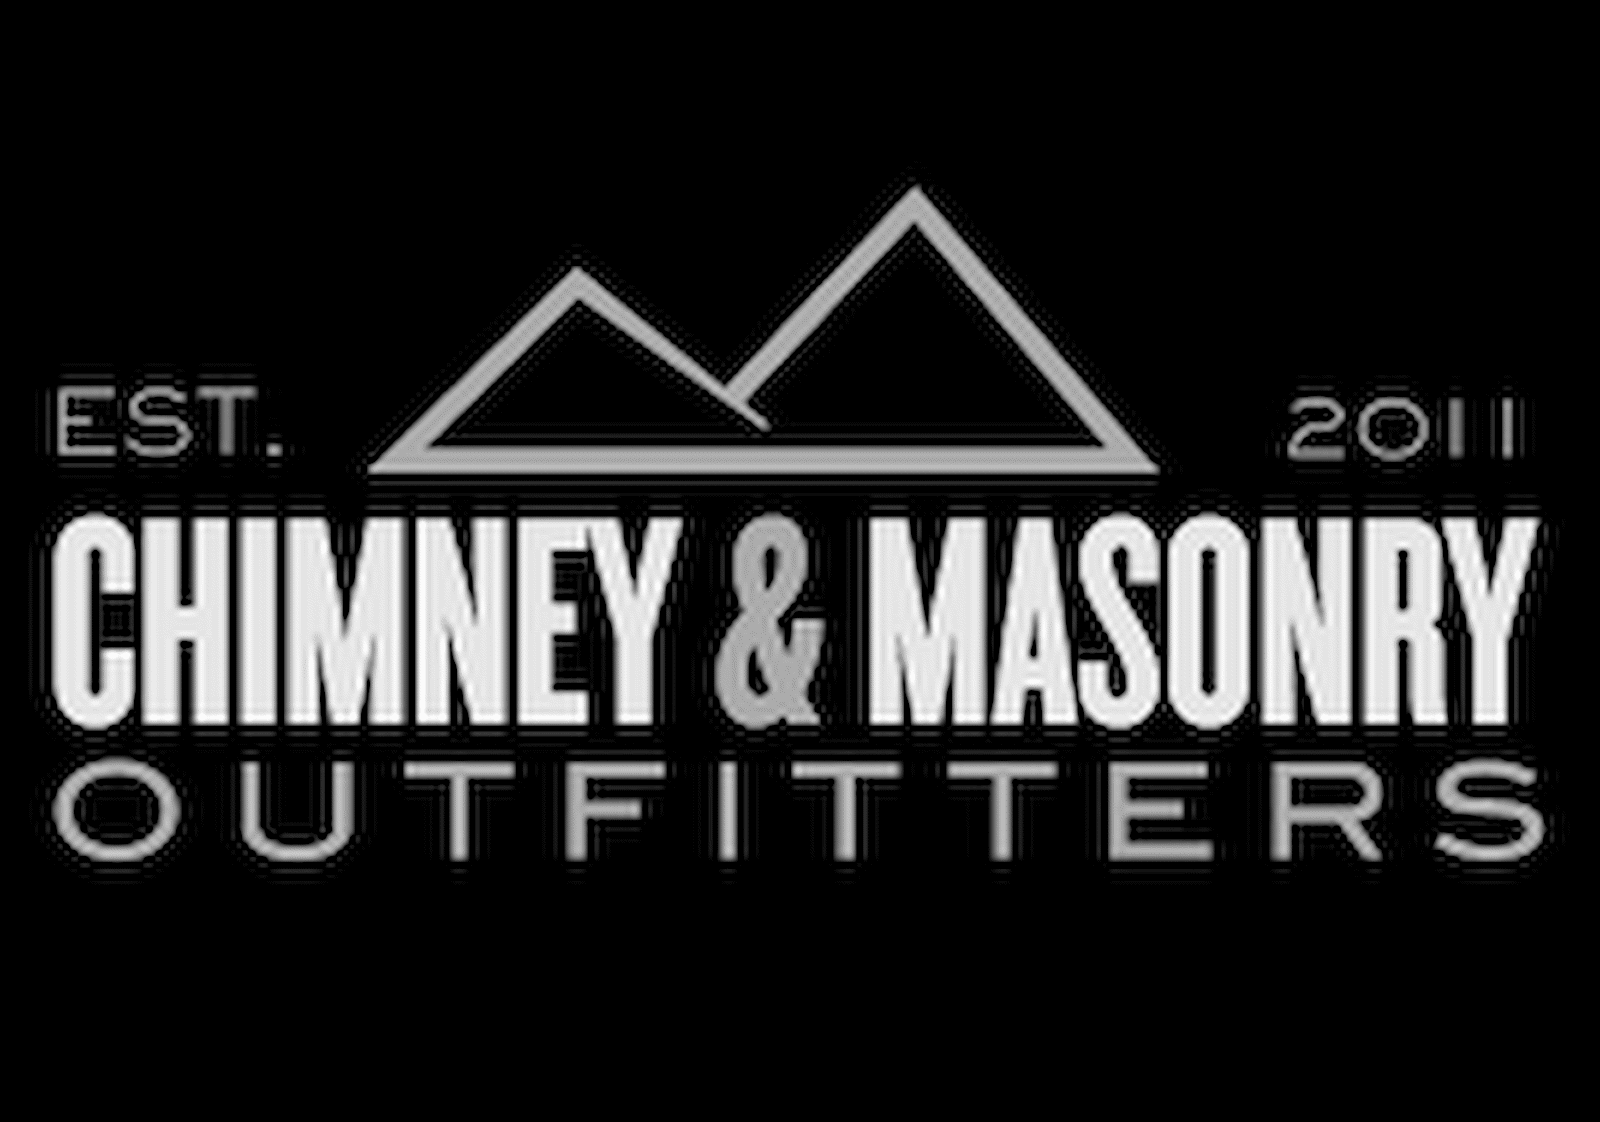 Chimney & Masonry Outfitters